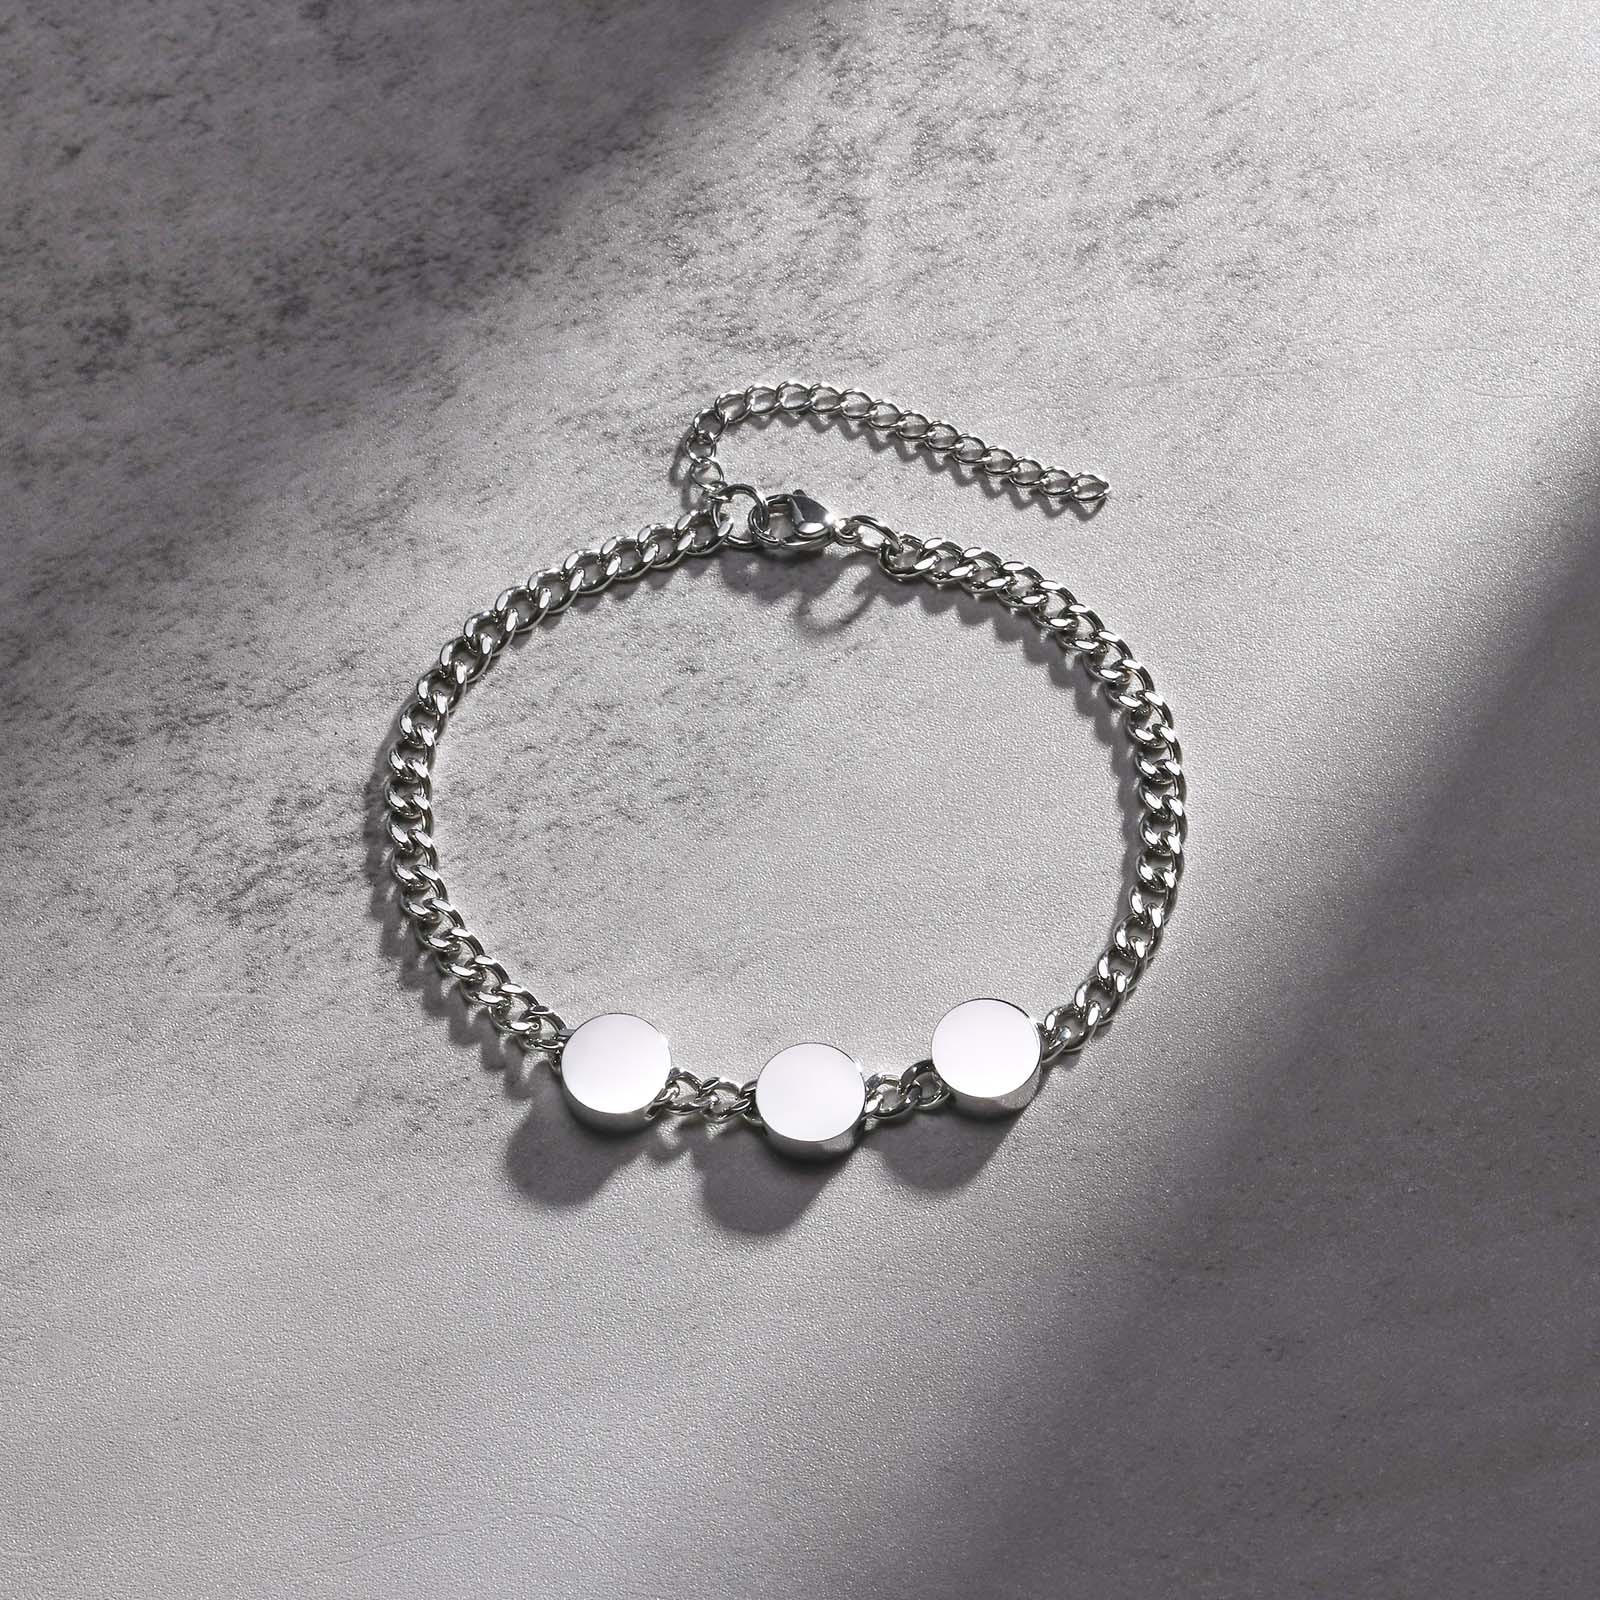 4:3 accessory [blank] bracelet